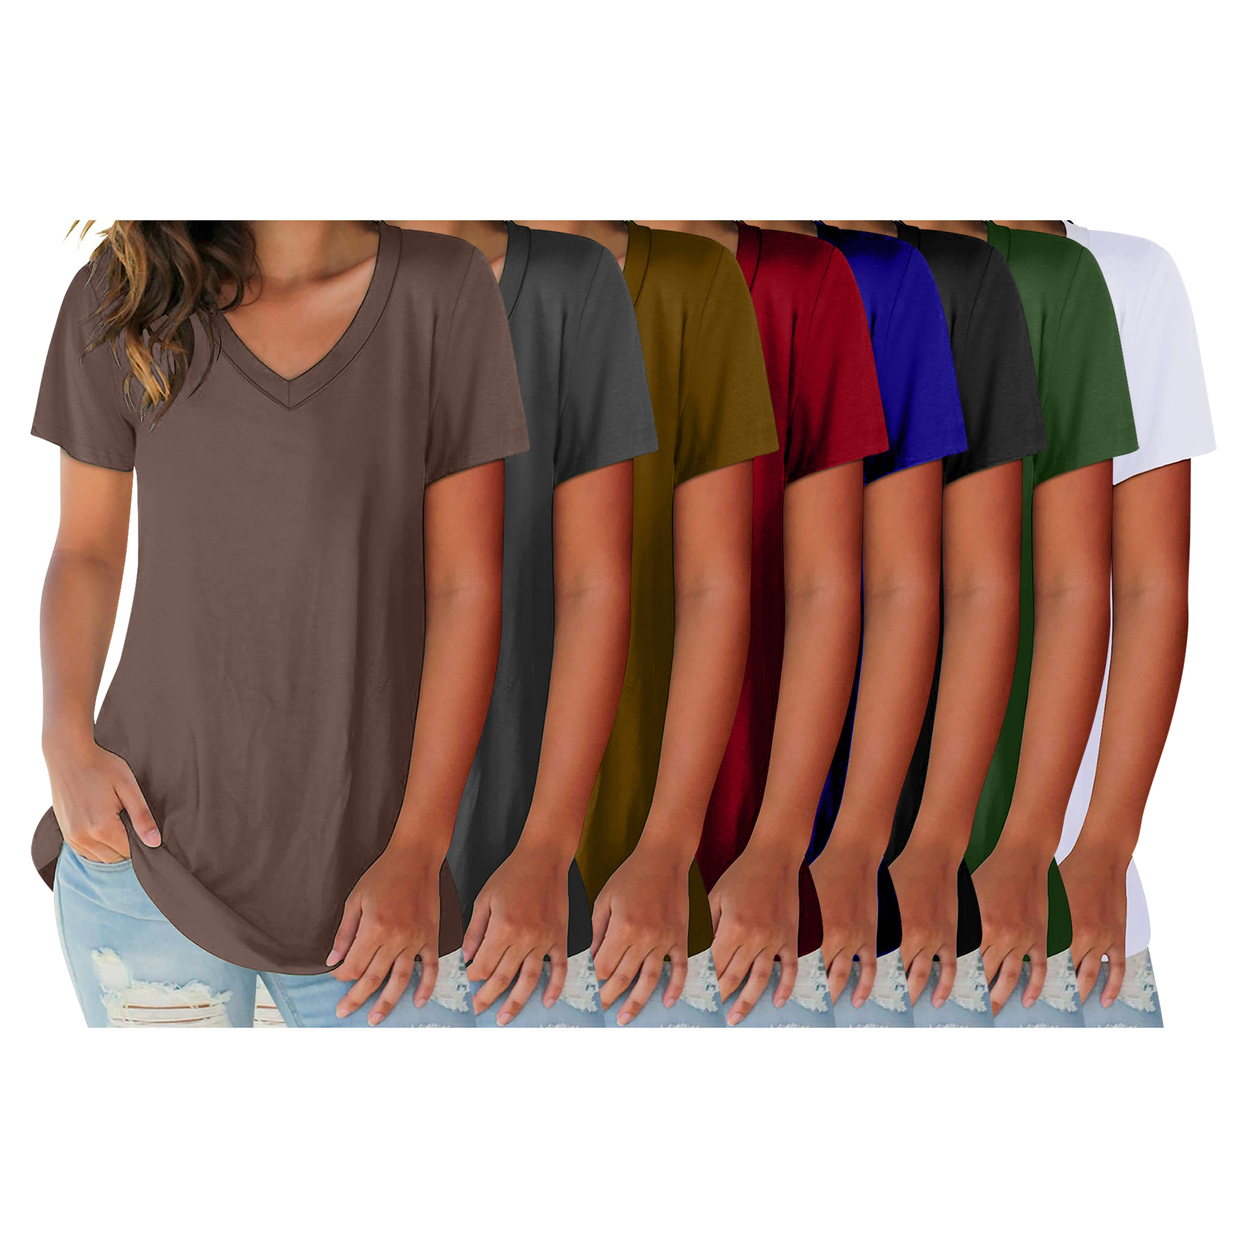 2-Pack: Women's Ultra Soft Smooth Cotton Blend Basic V-Neck Short Sleeve Shirts - Navy & Brown, X-large